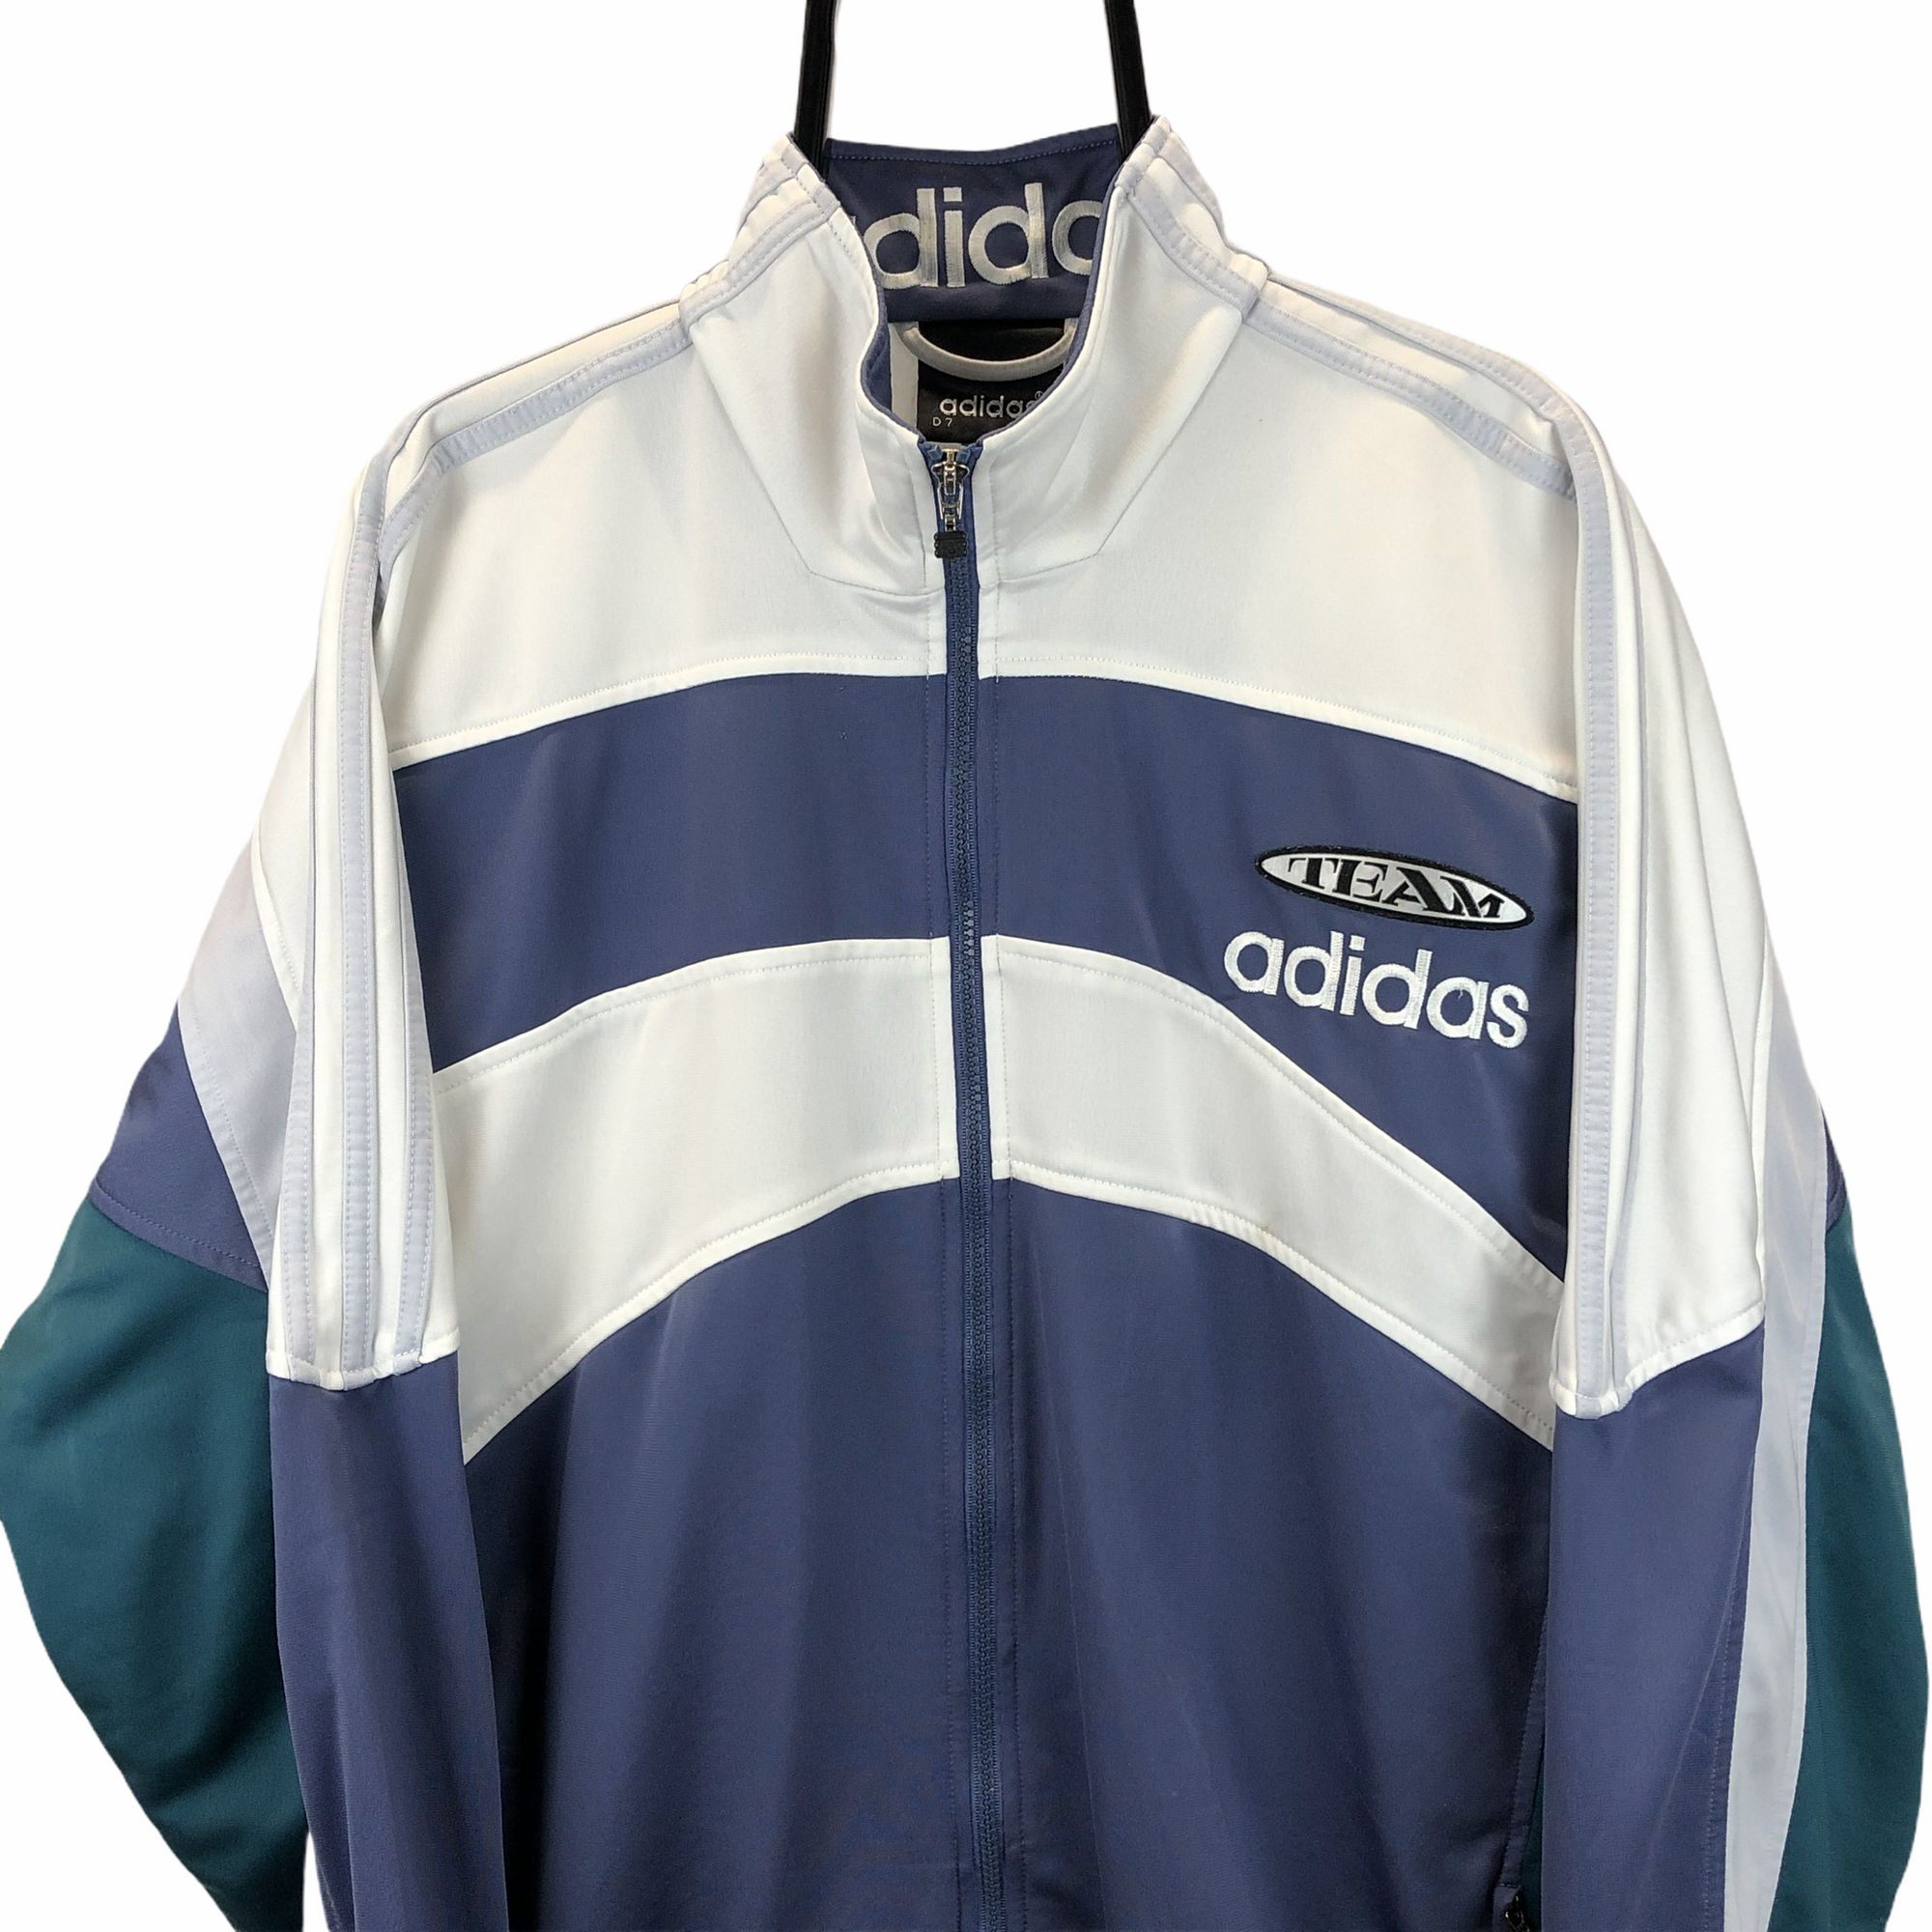 Vintage 80s Team Adidas Track Jacket - Men's Large/Women's XL